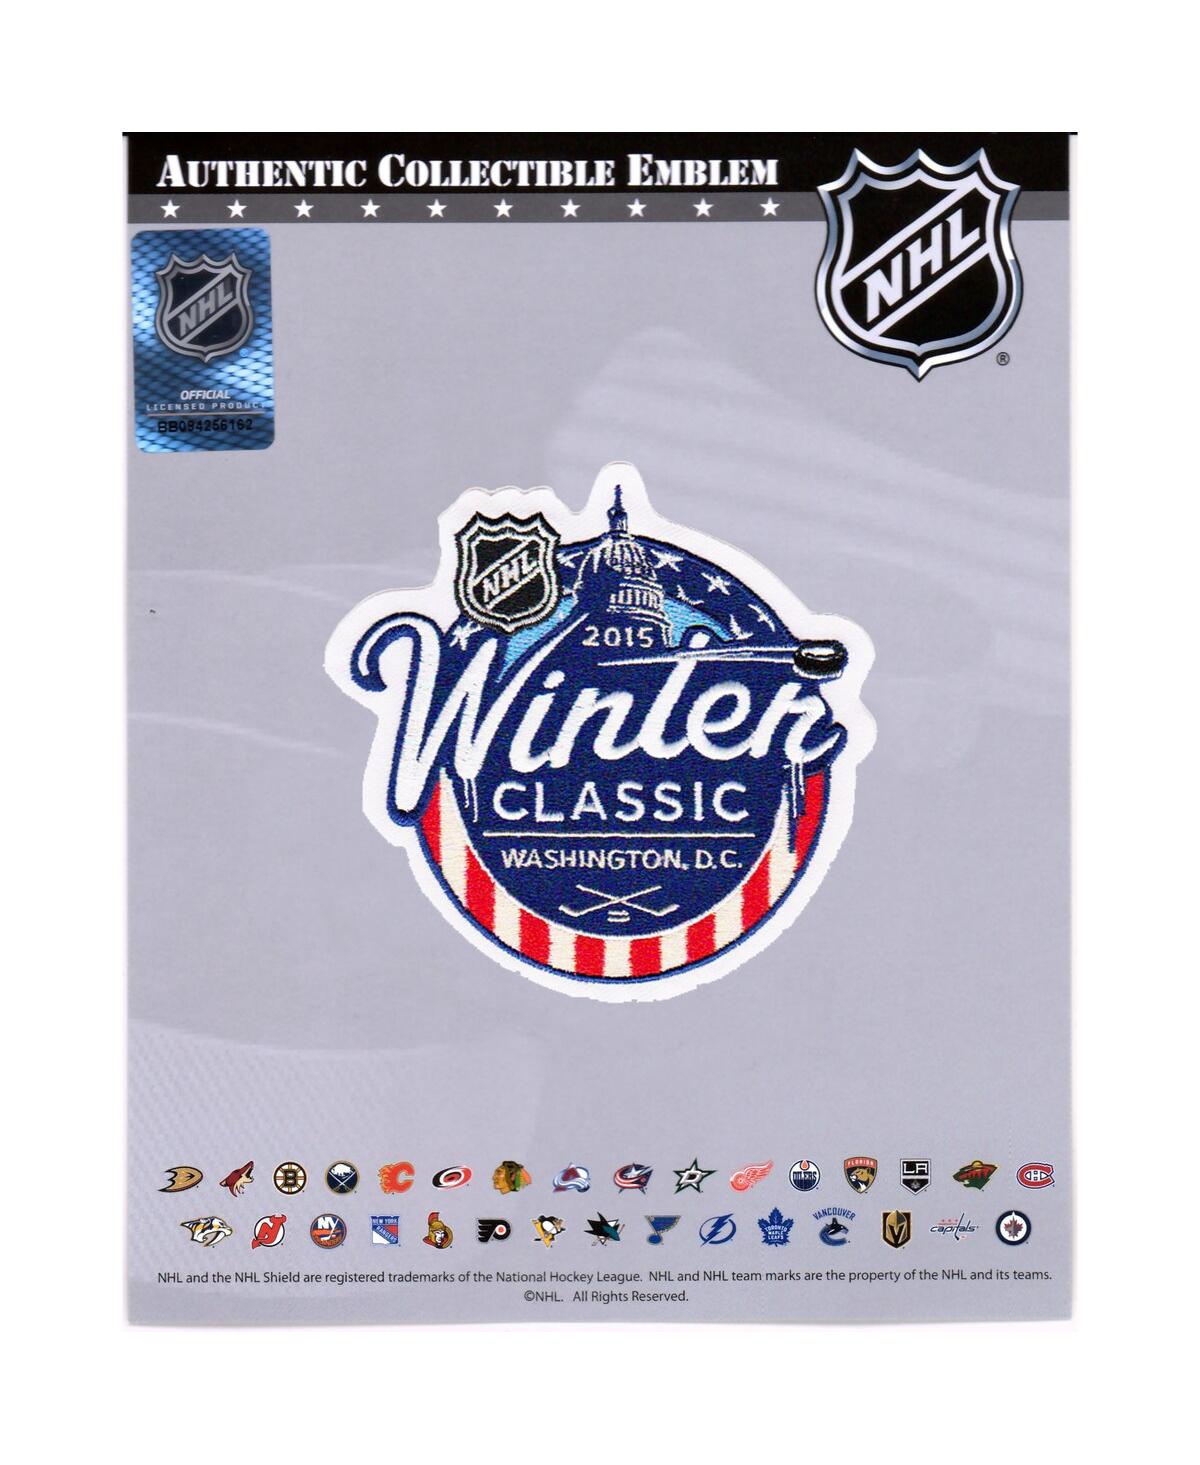 Chicago Blackhawks vs. Washington Capitals 2015 Nhl Winter Classic National Emblem Jersey Patch - Multi